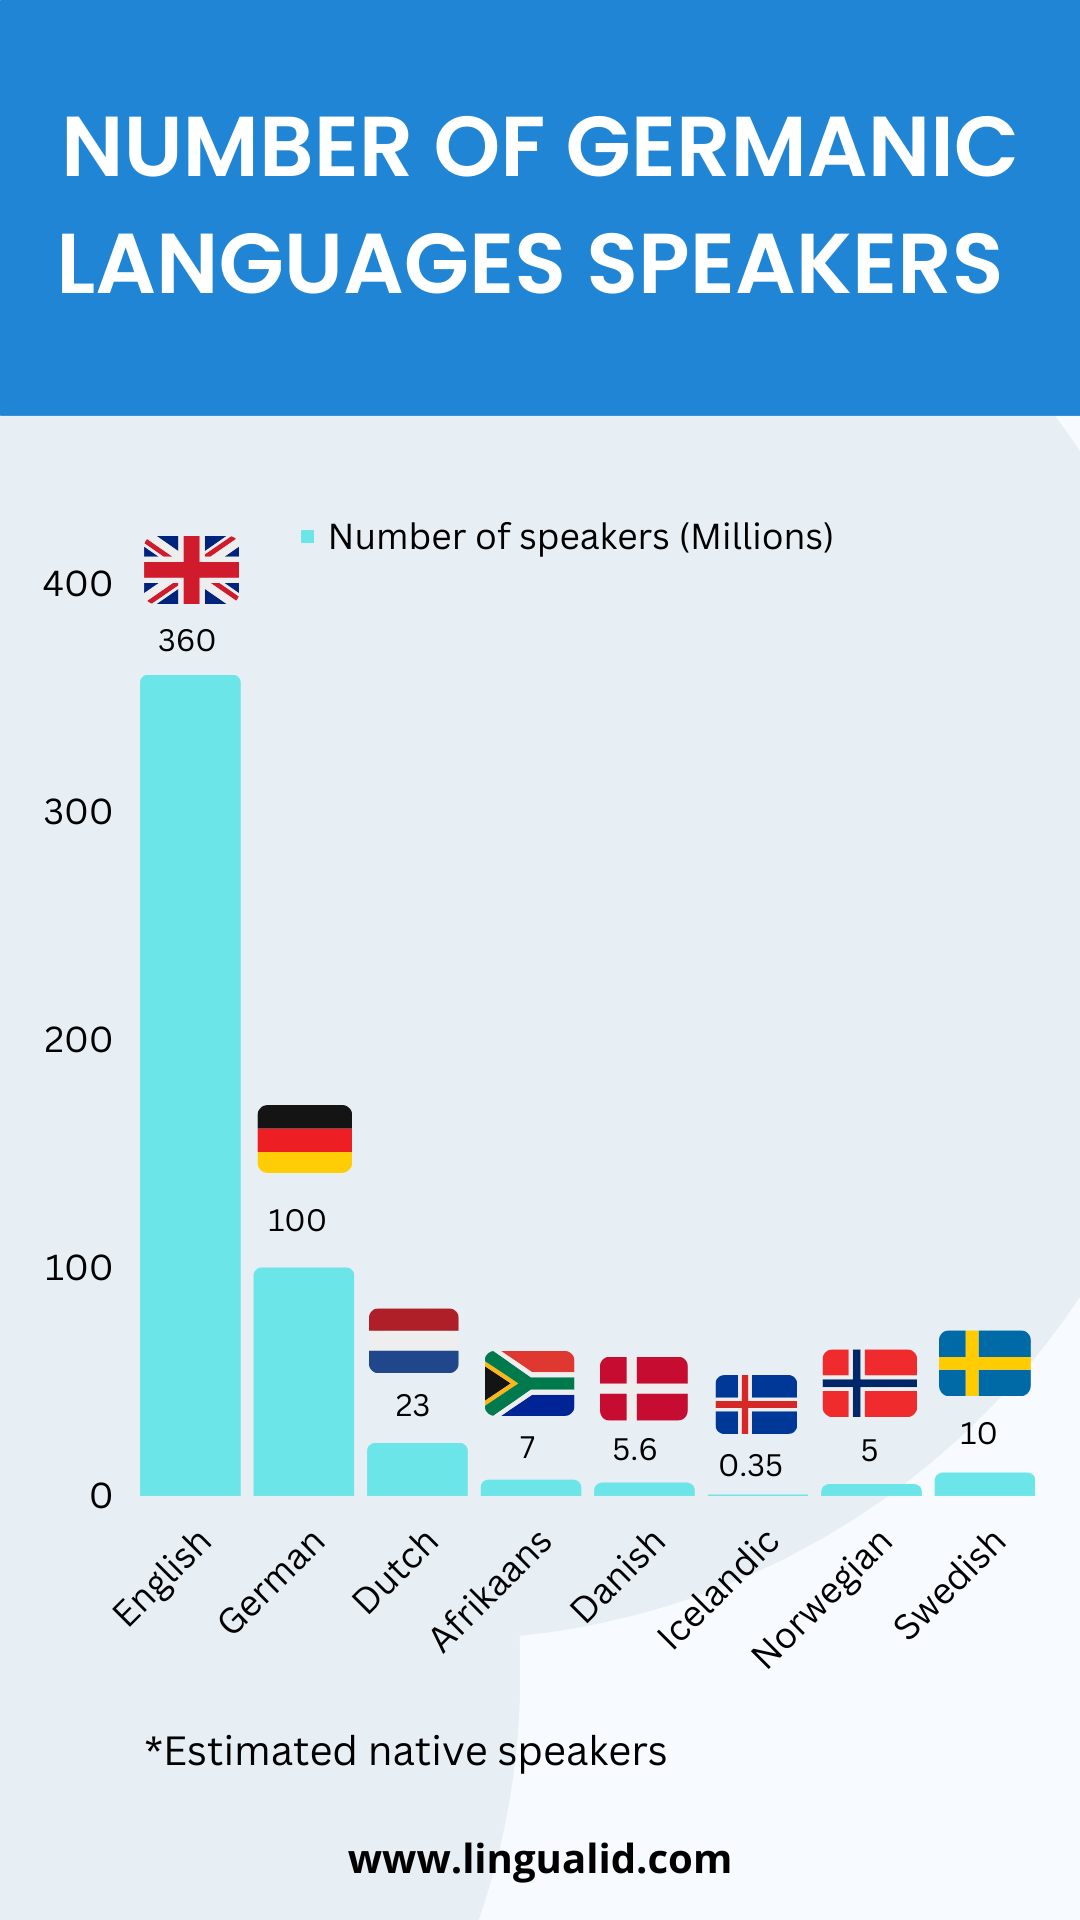 Number of germanic languages speakers worldwide